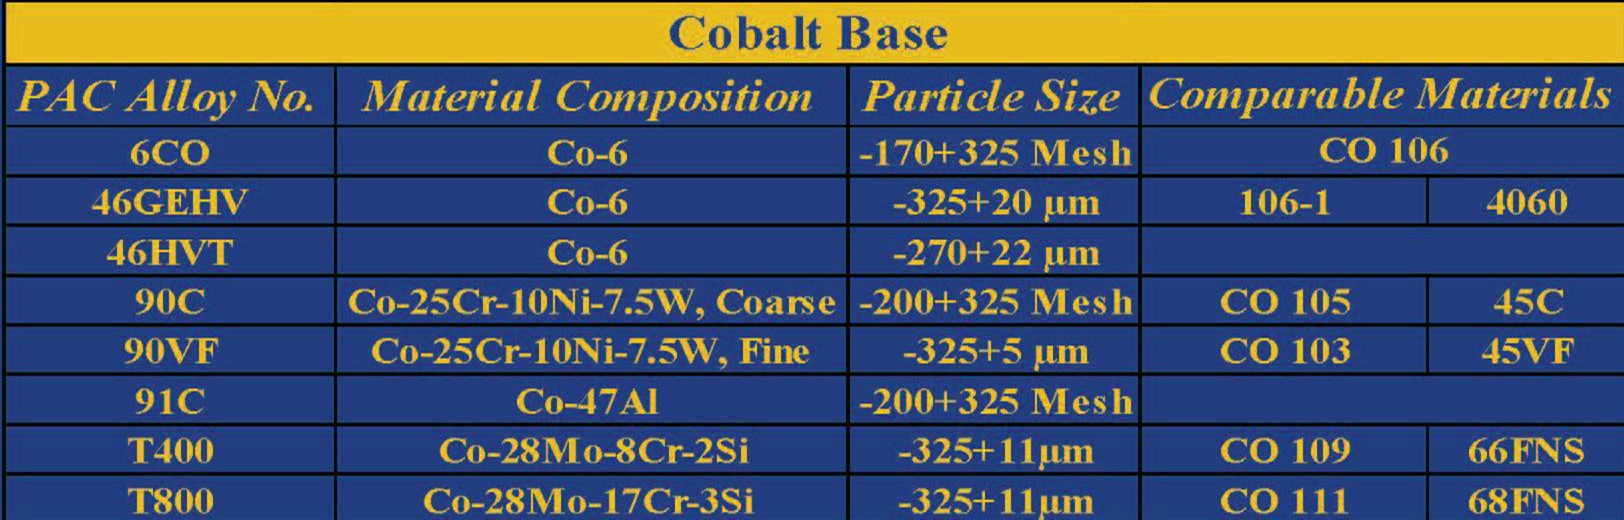 Cobalt Base